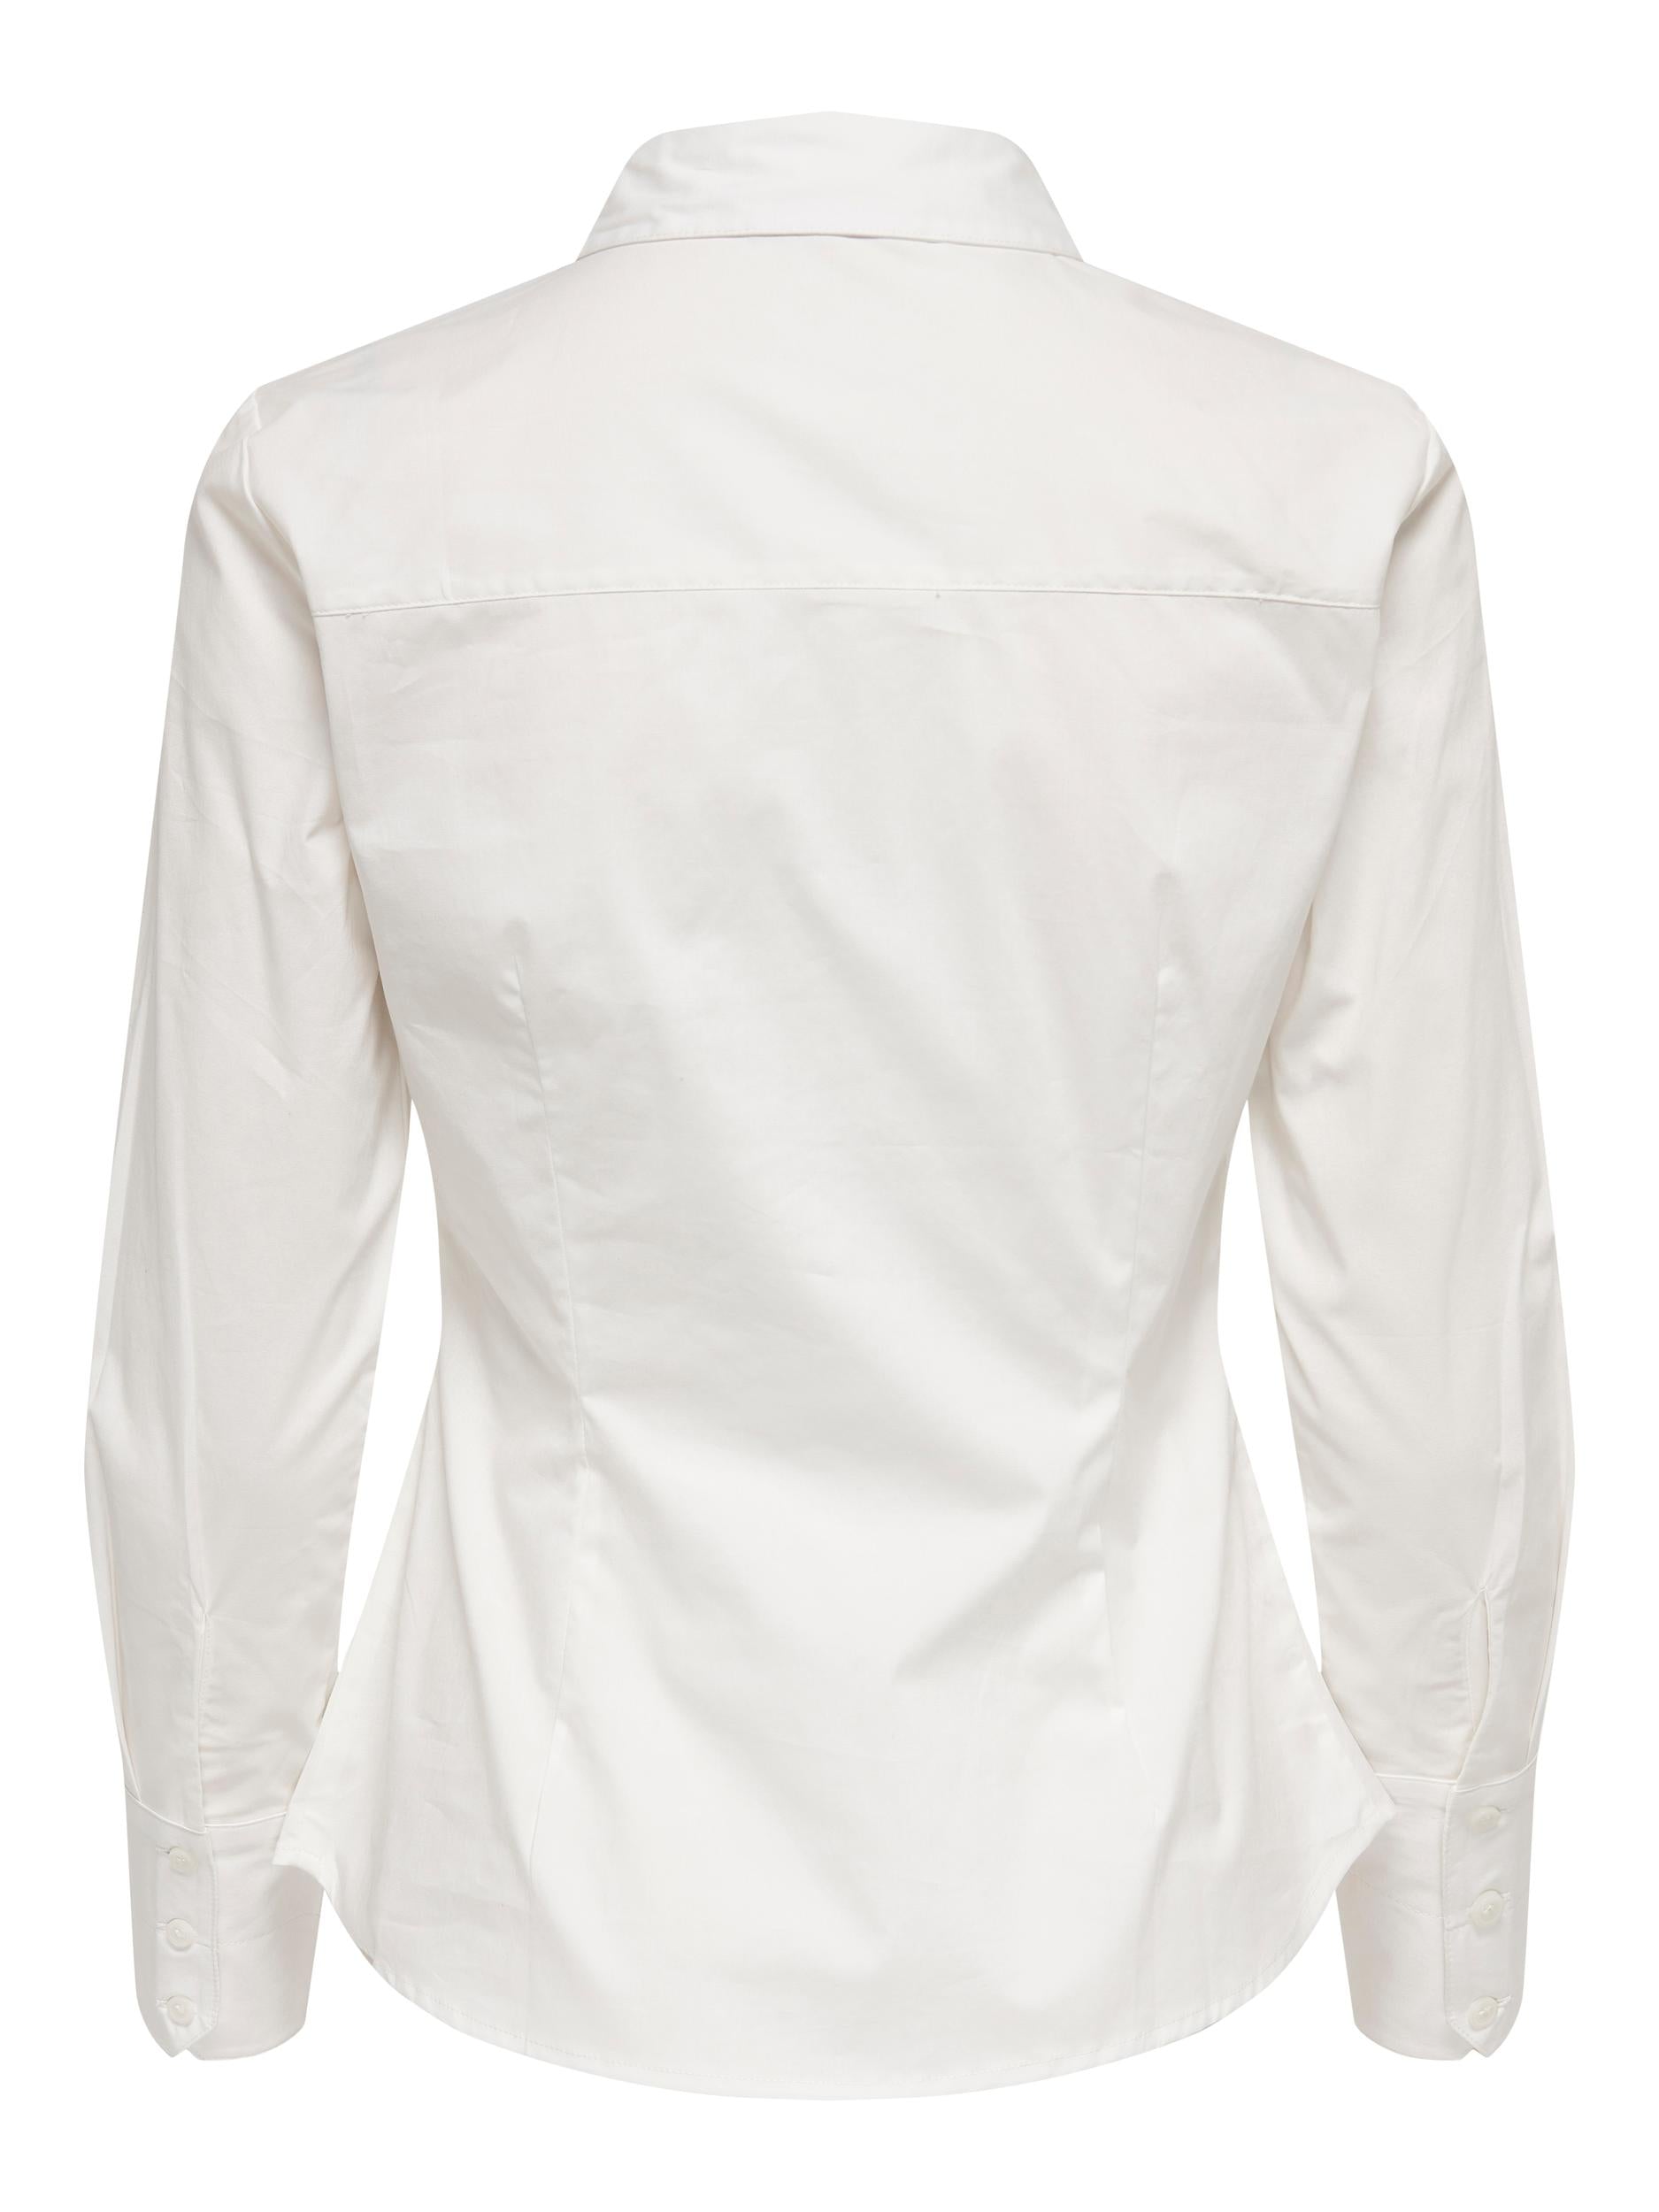 Ladies Frida Long Sleeve White Shirt-Ghost Back View